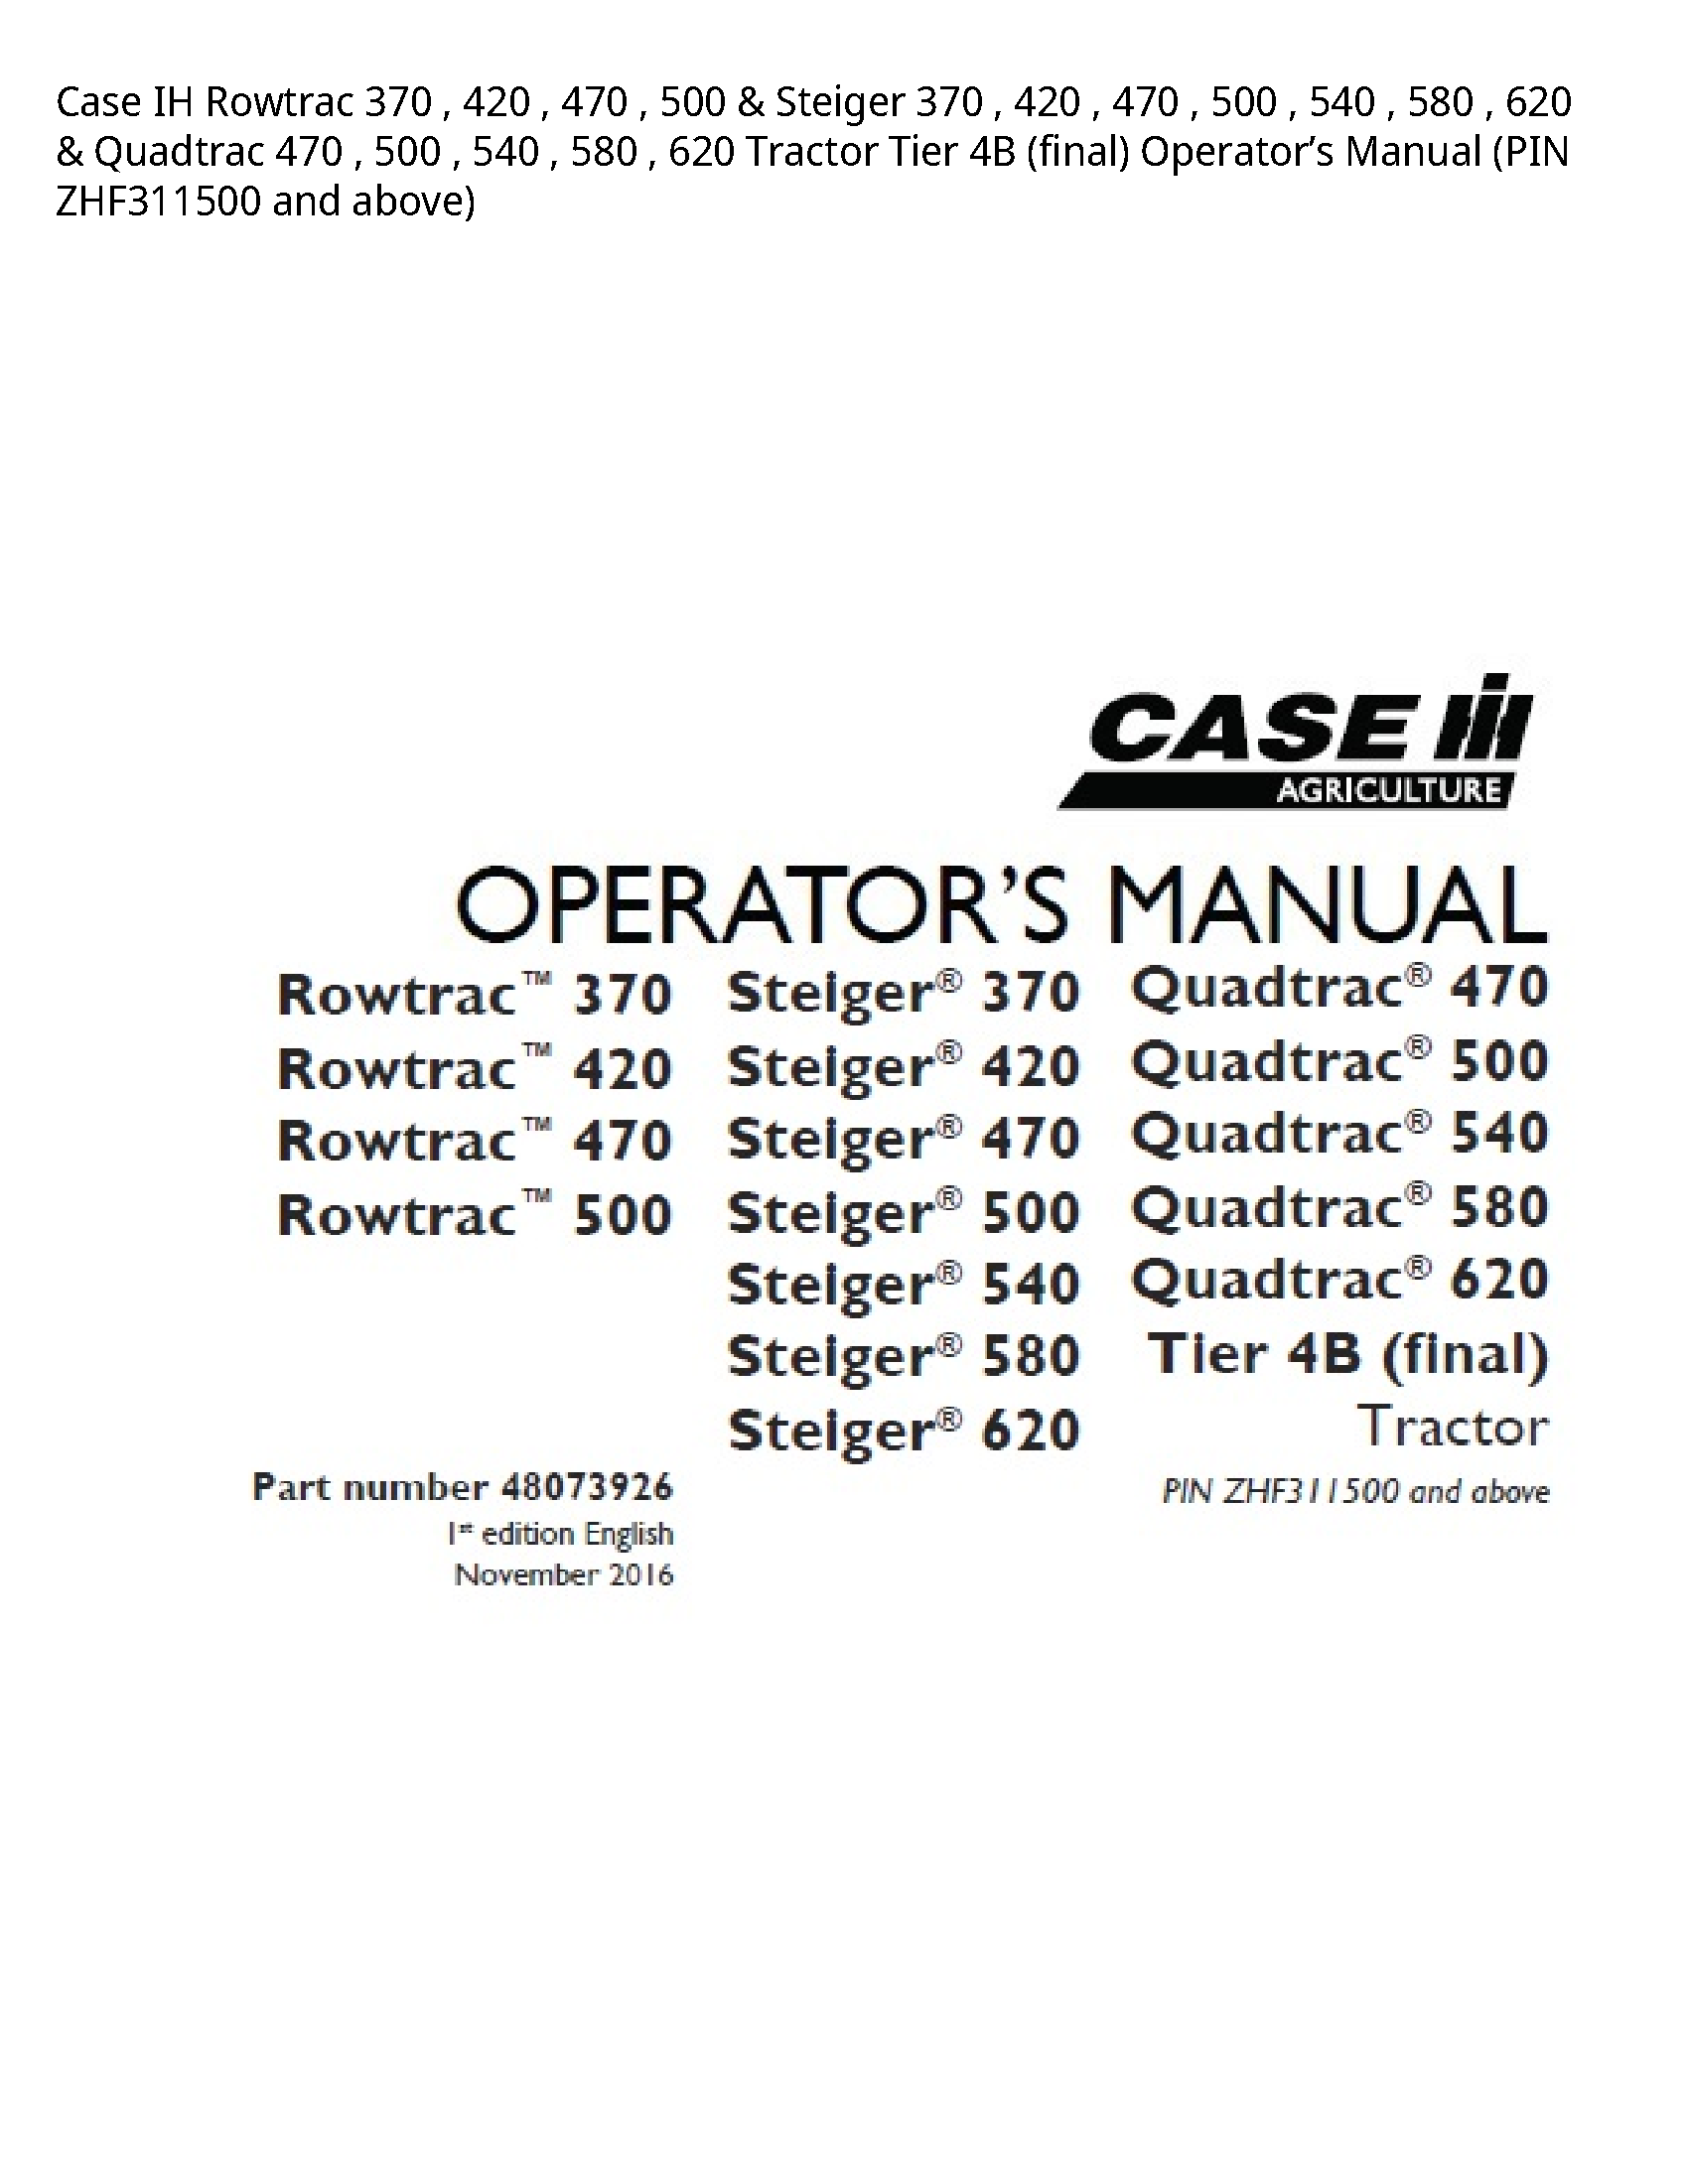 Case/Case IH 370 IH Rowtrac Steiger Quadtrac Tractor Tier (final) Operator’s manual